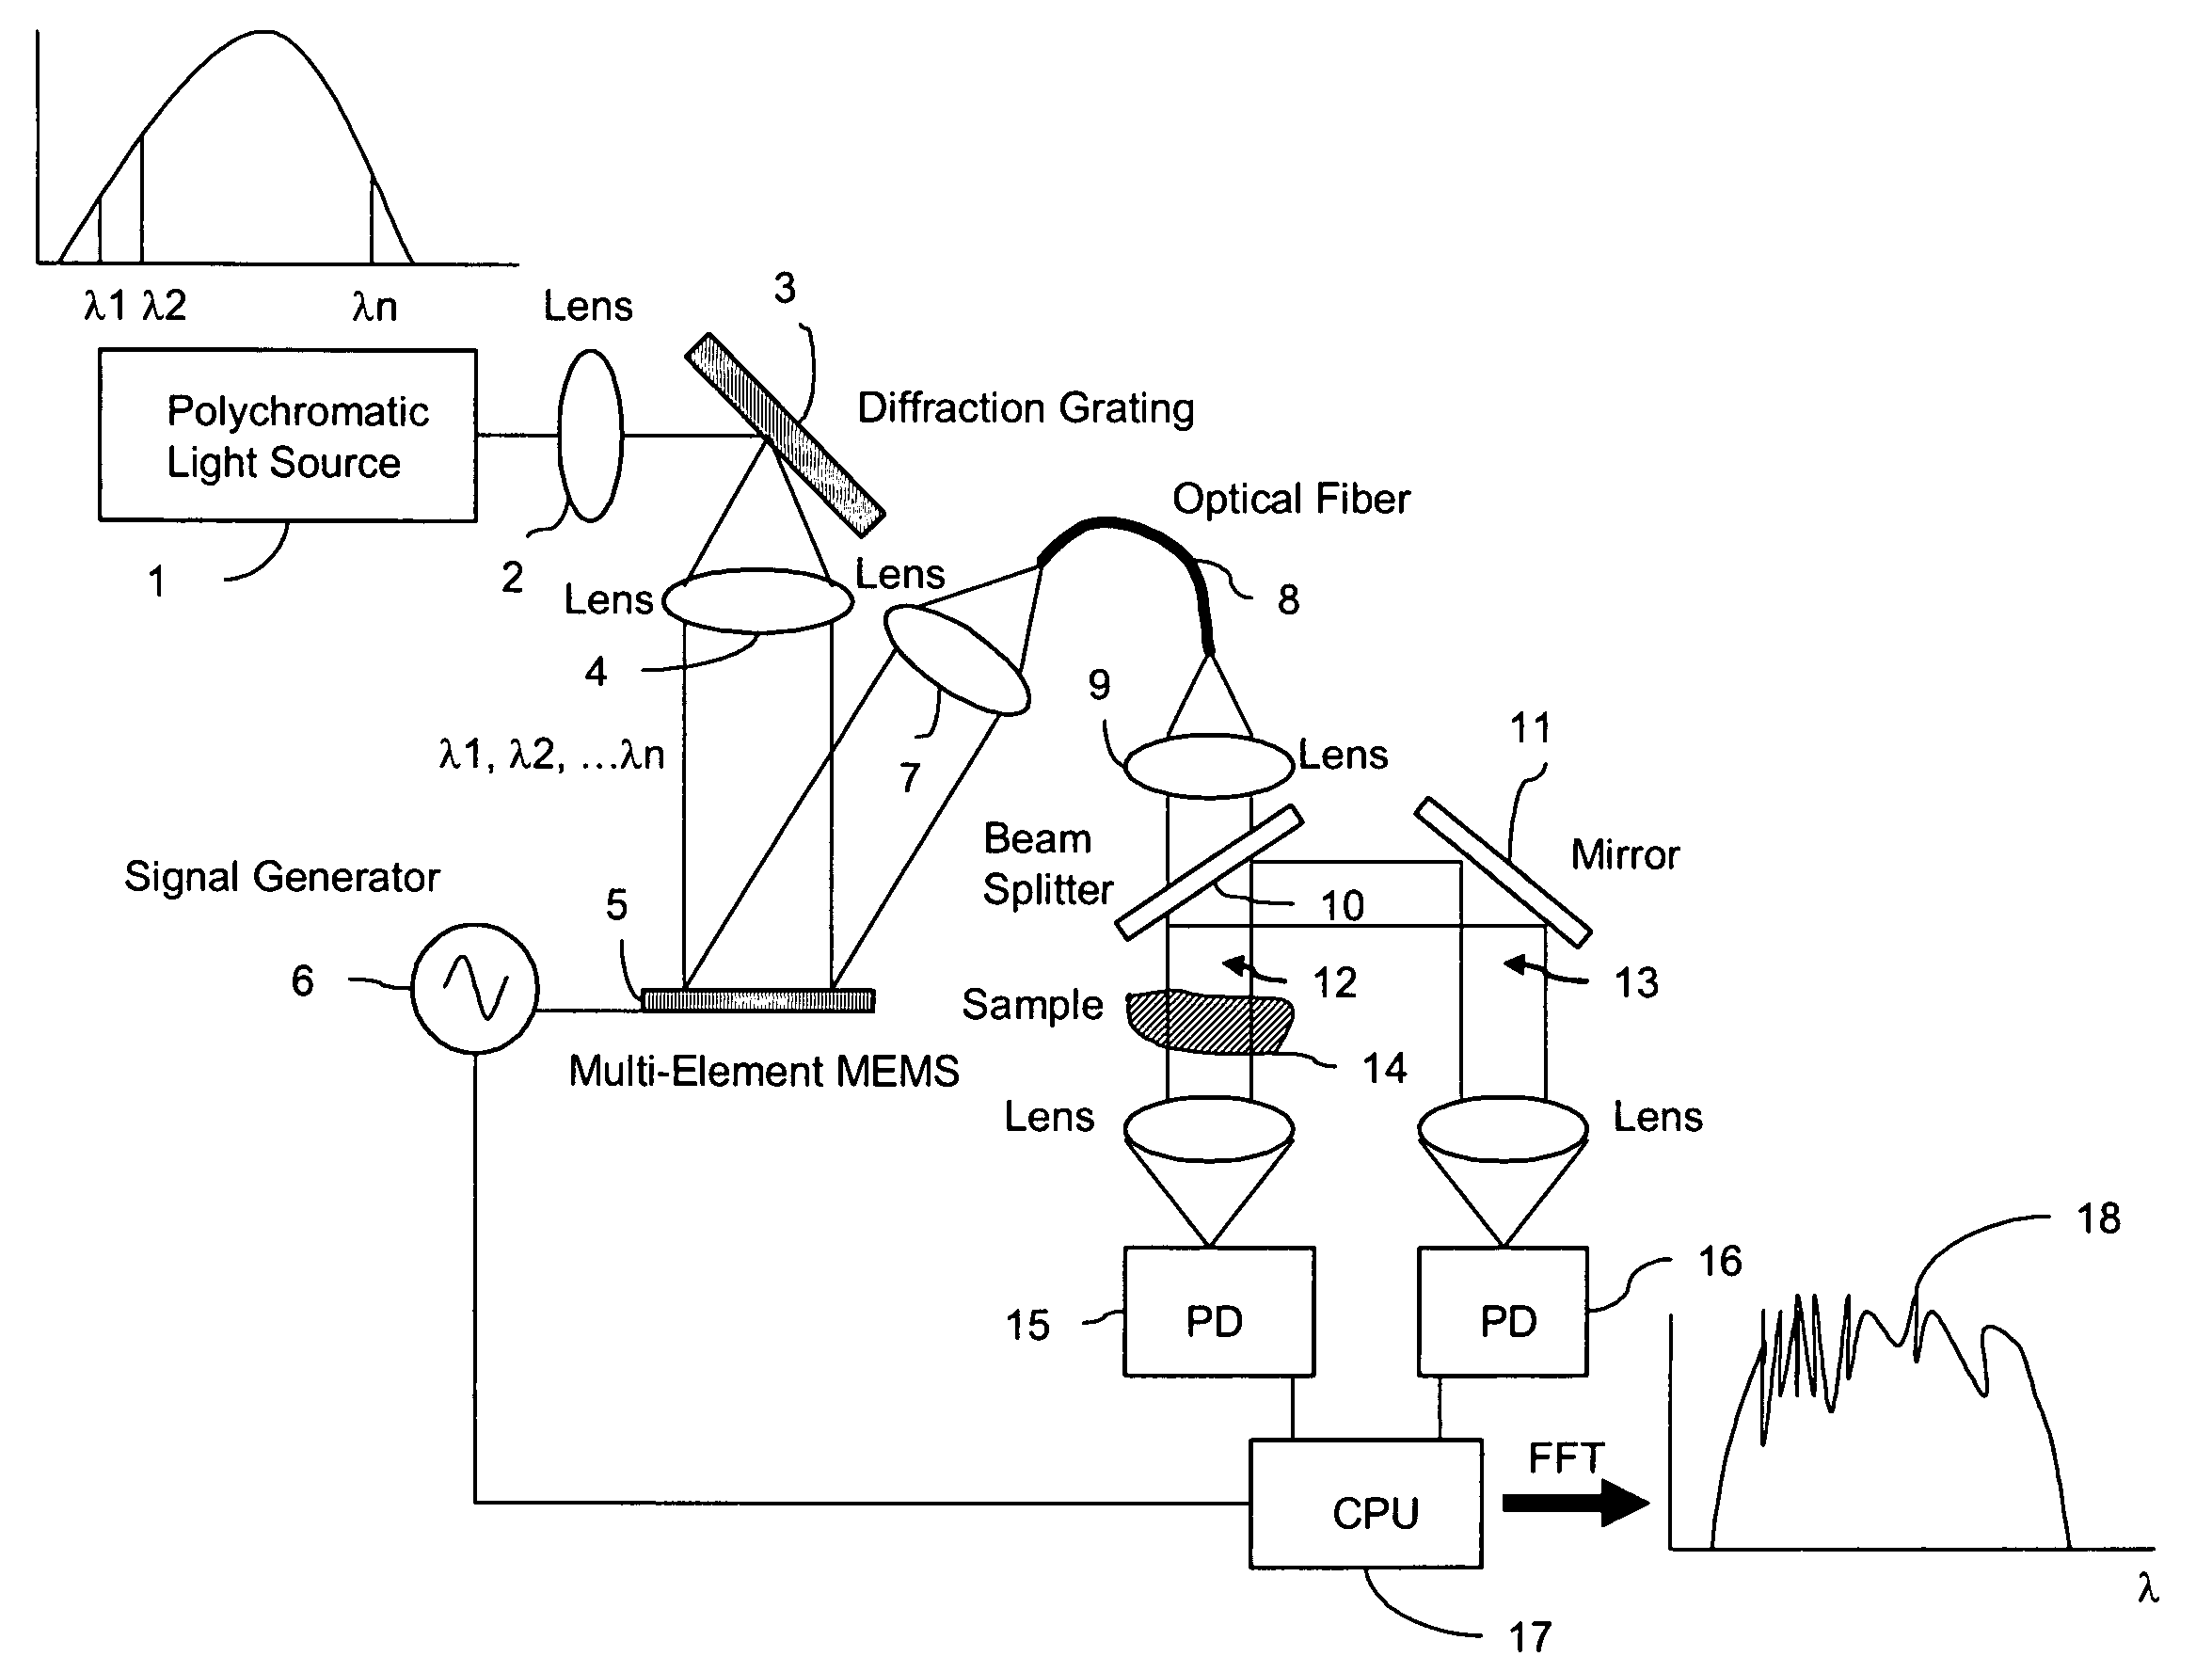 Fourier Transform spectrometer apparatus using multi-element MEMS